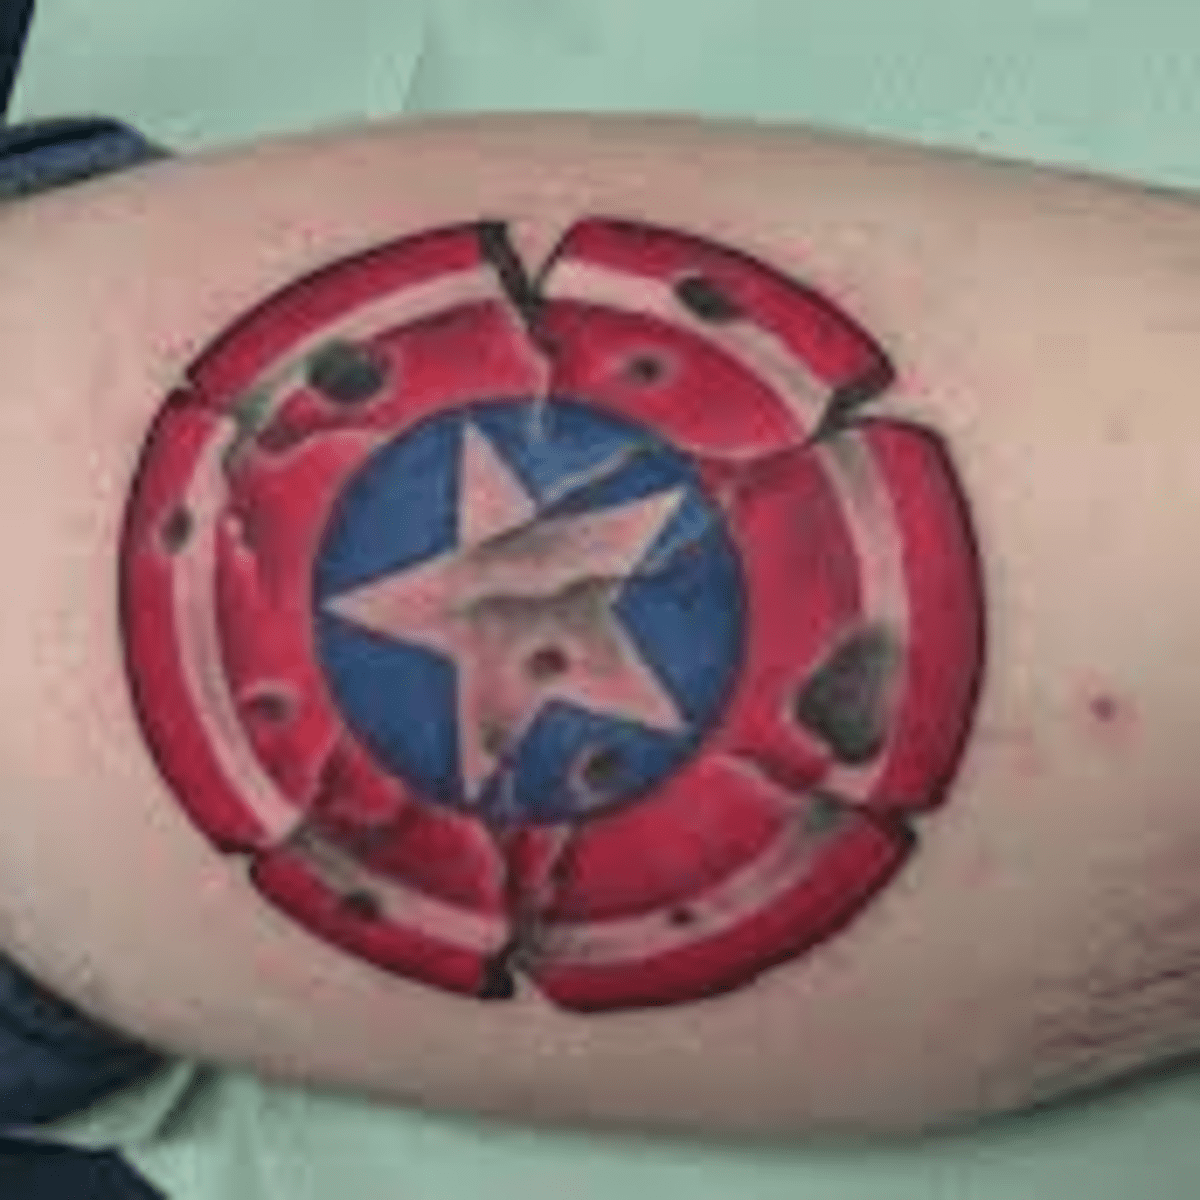 UPDATED 40 Heroic Captain America Tattoos